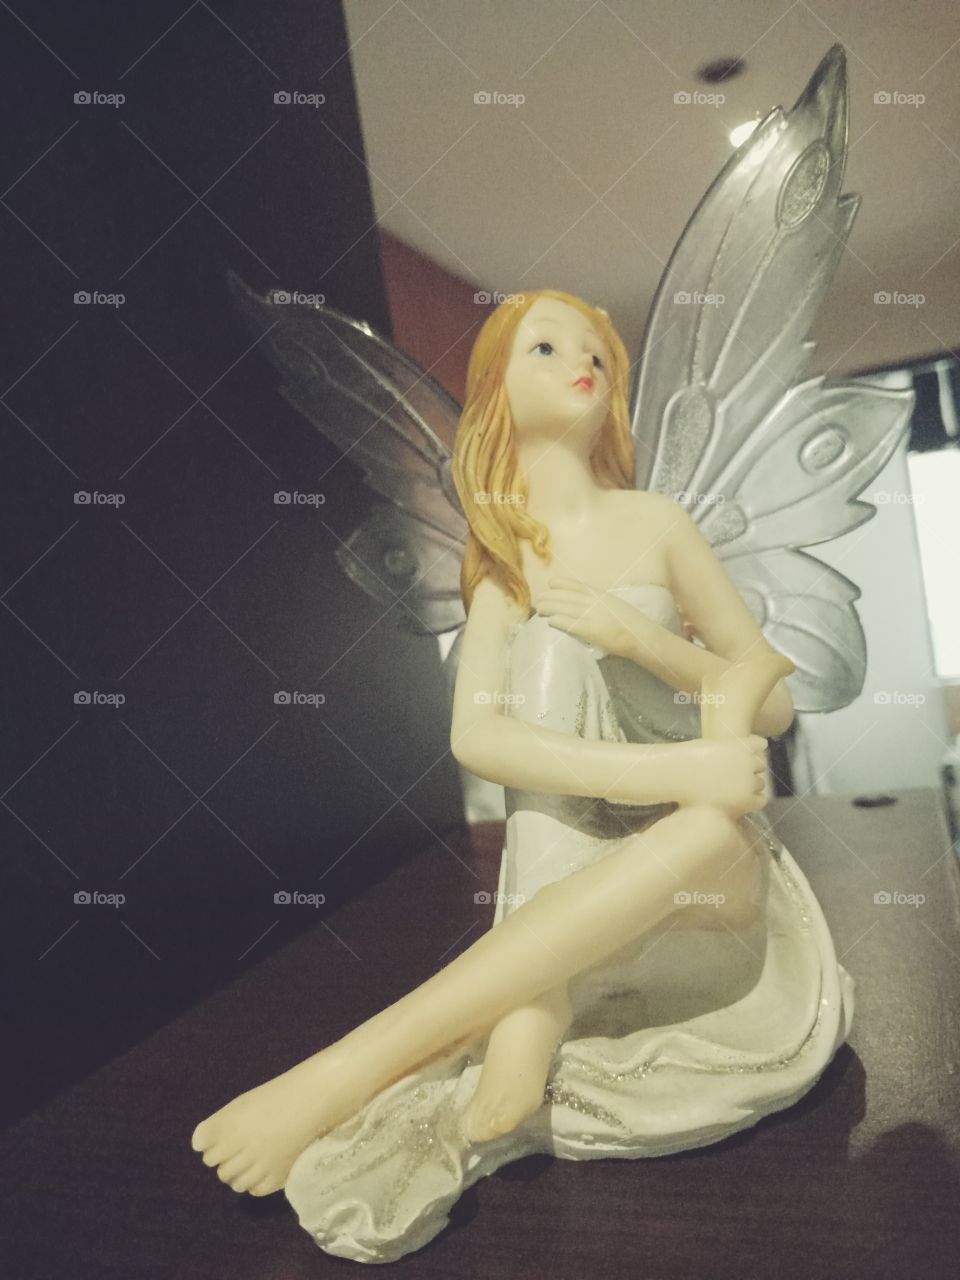 My favorite Figurine,
  A Beautiful angel on earth.